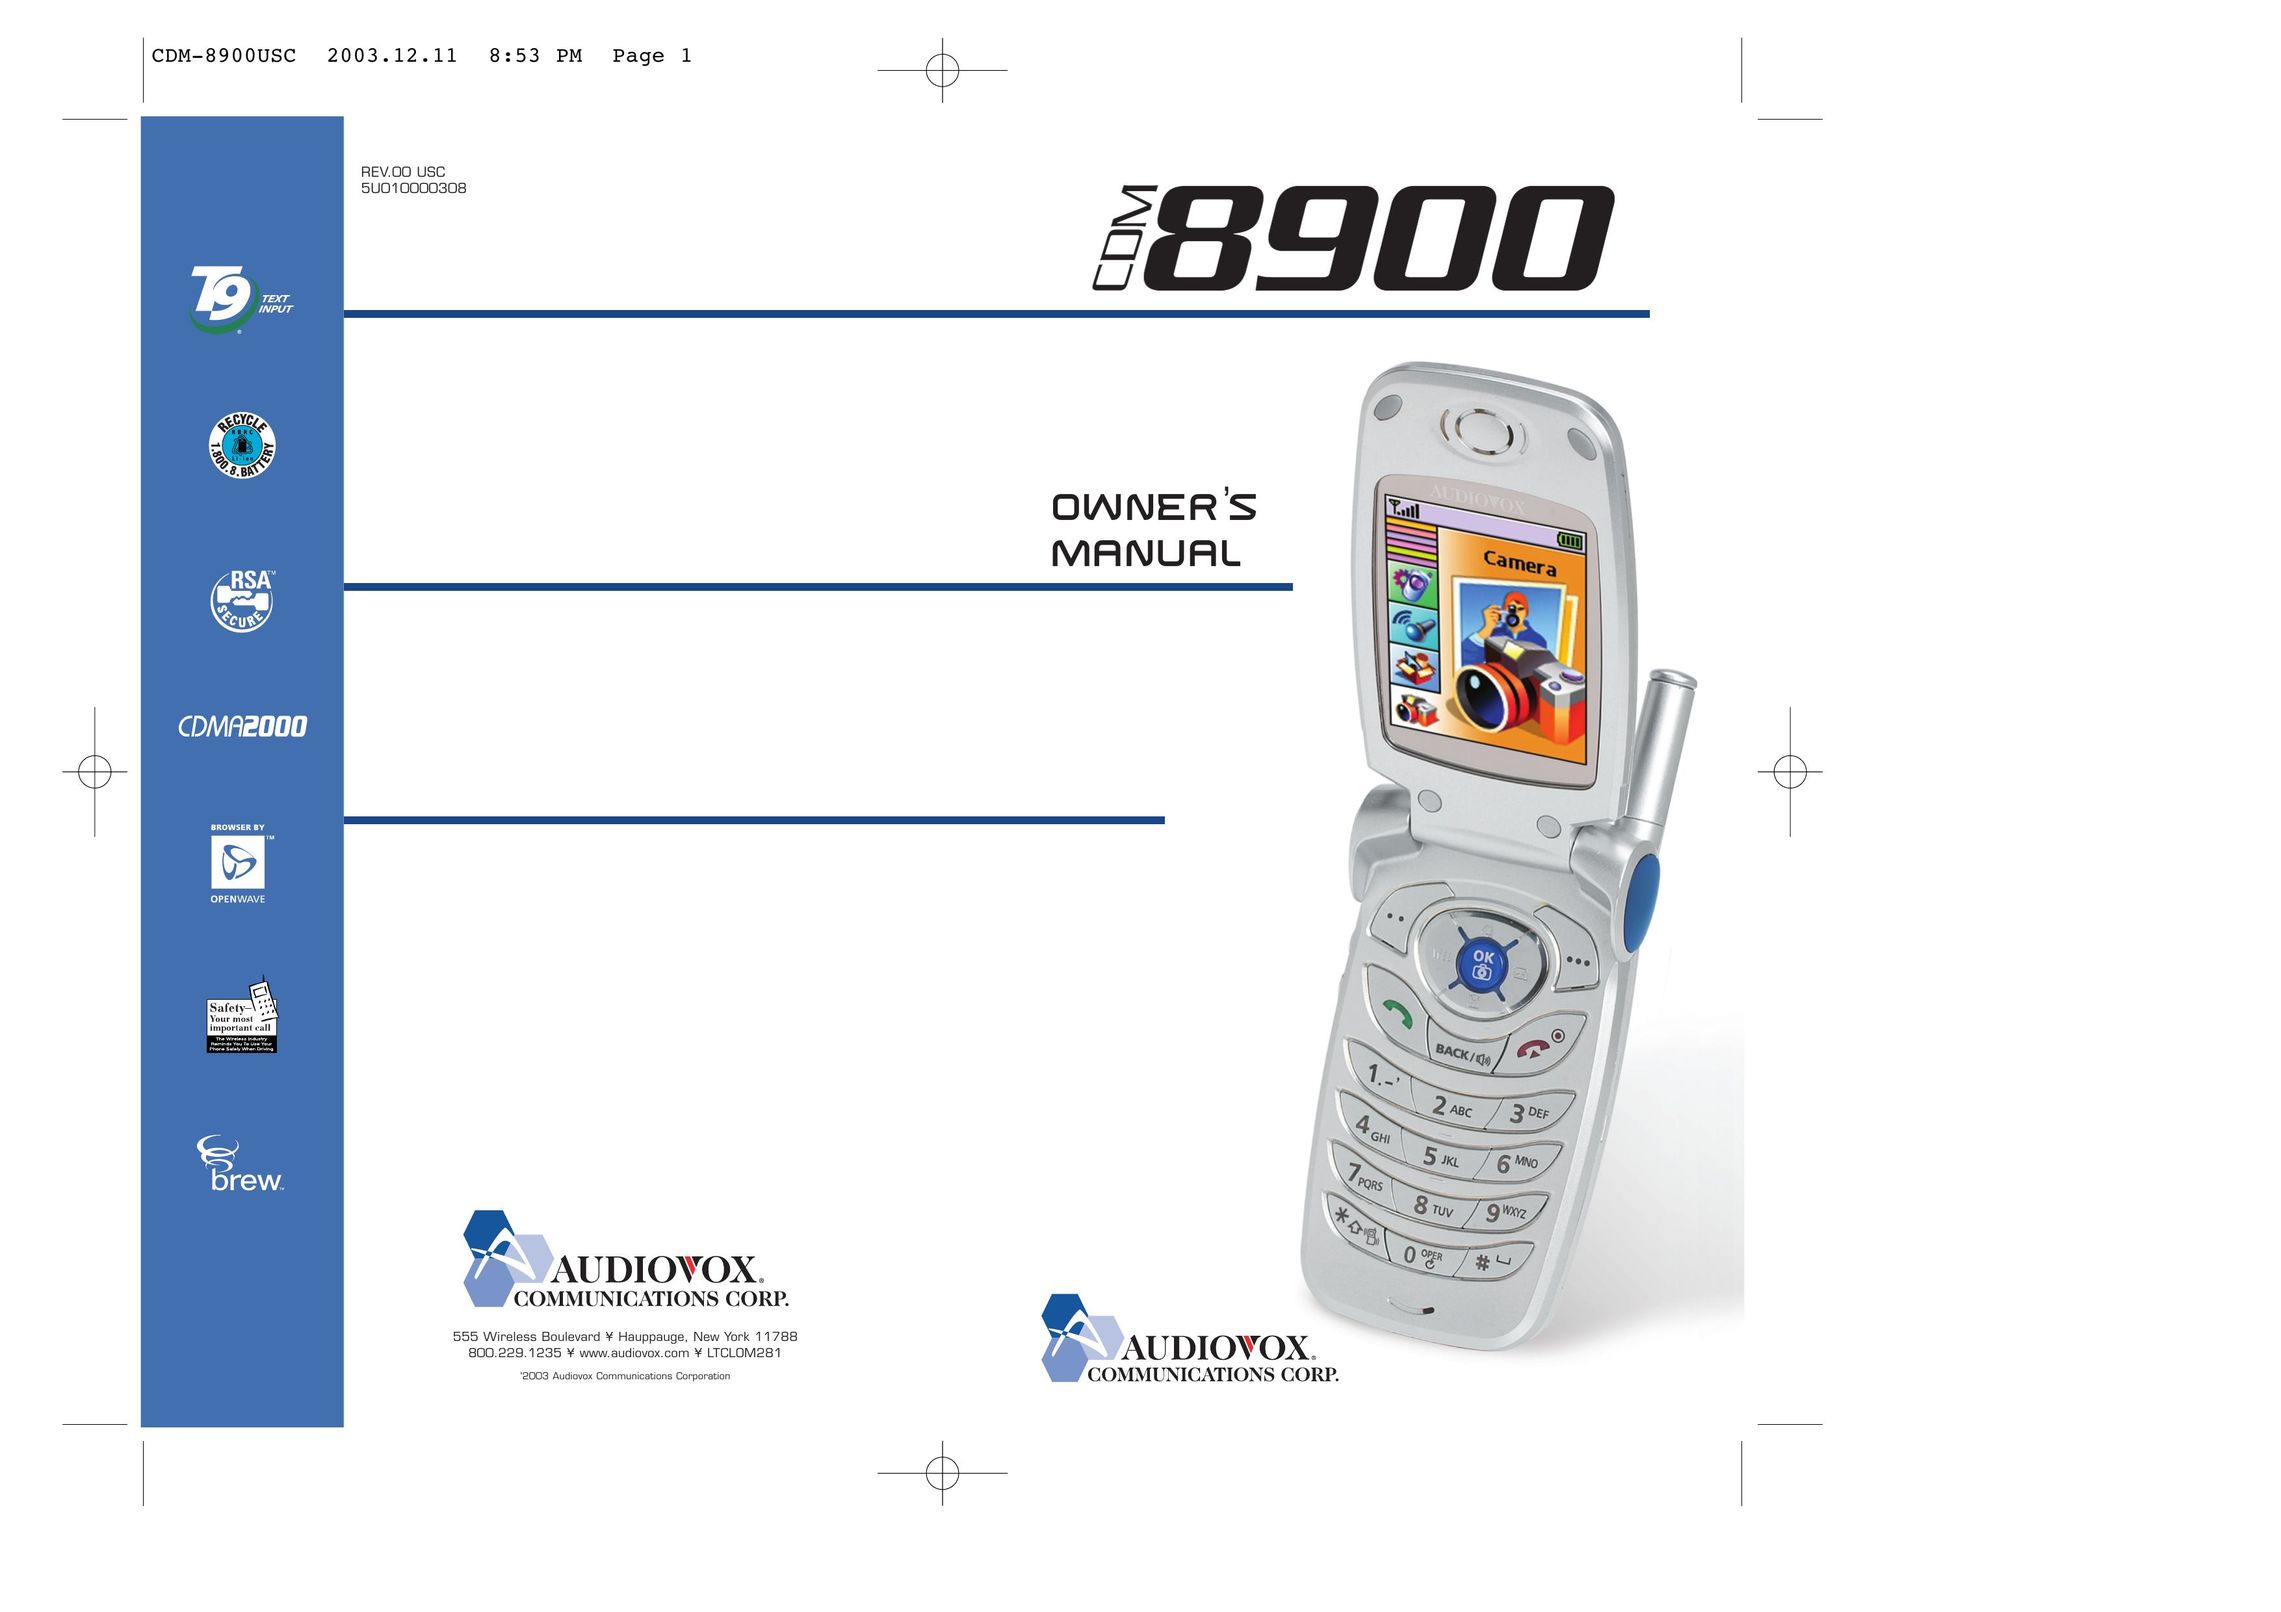 Audiovox CDM 8900 Cell Phone User Manual